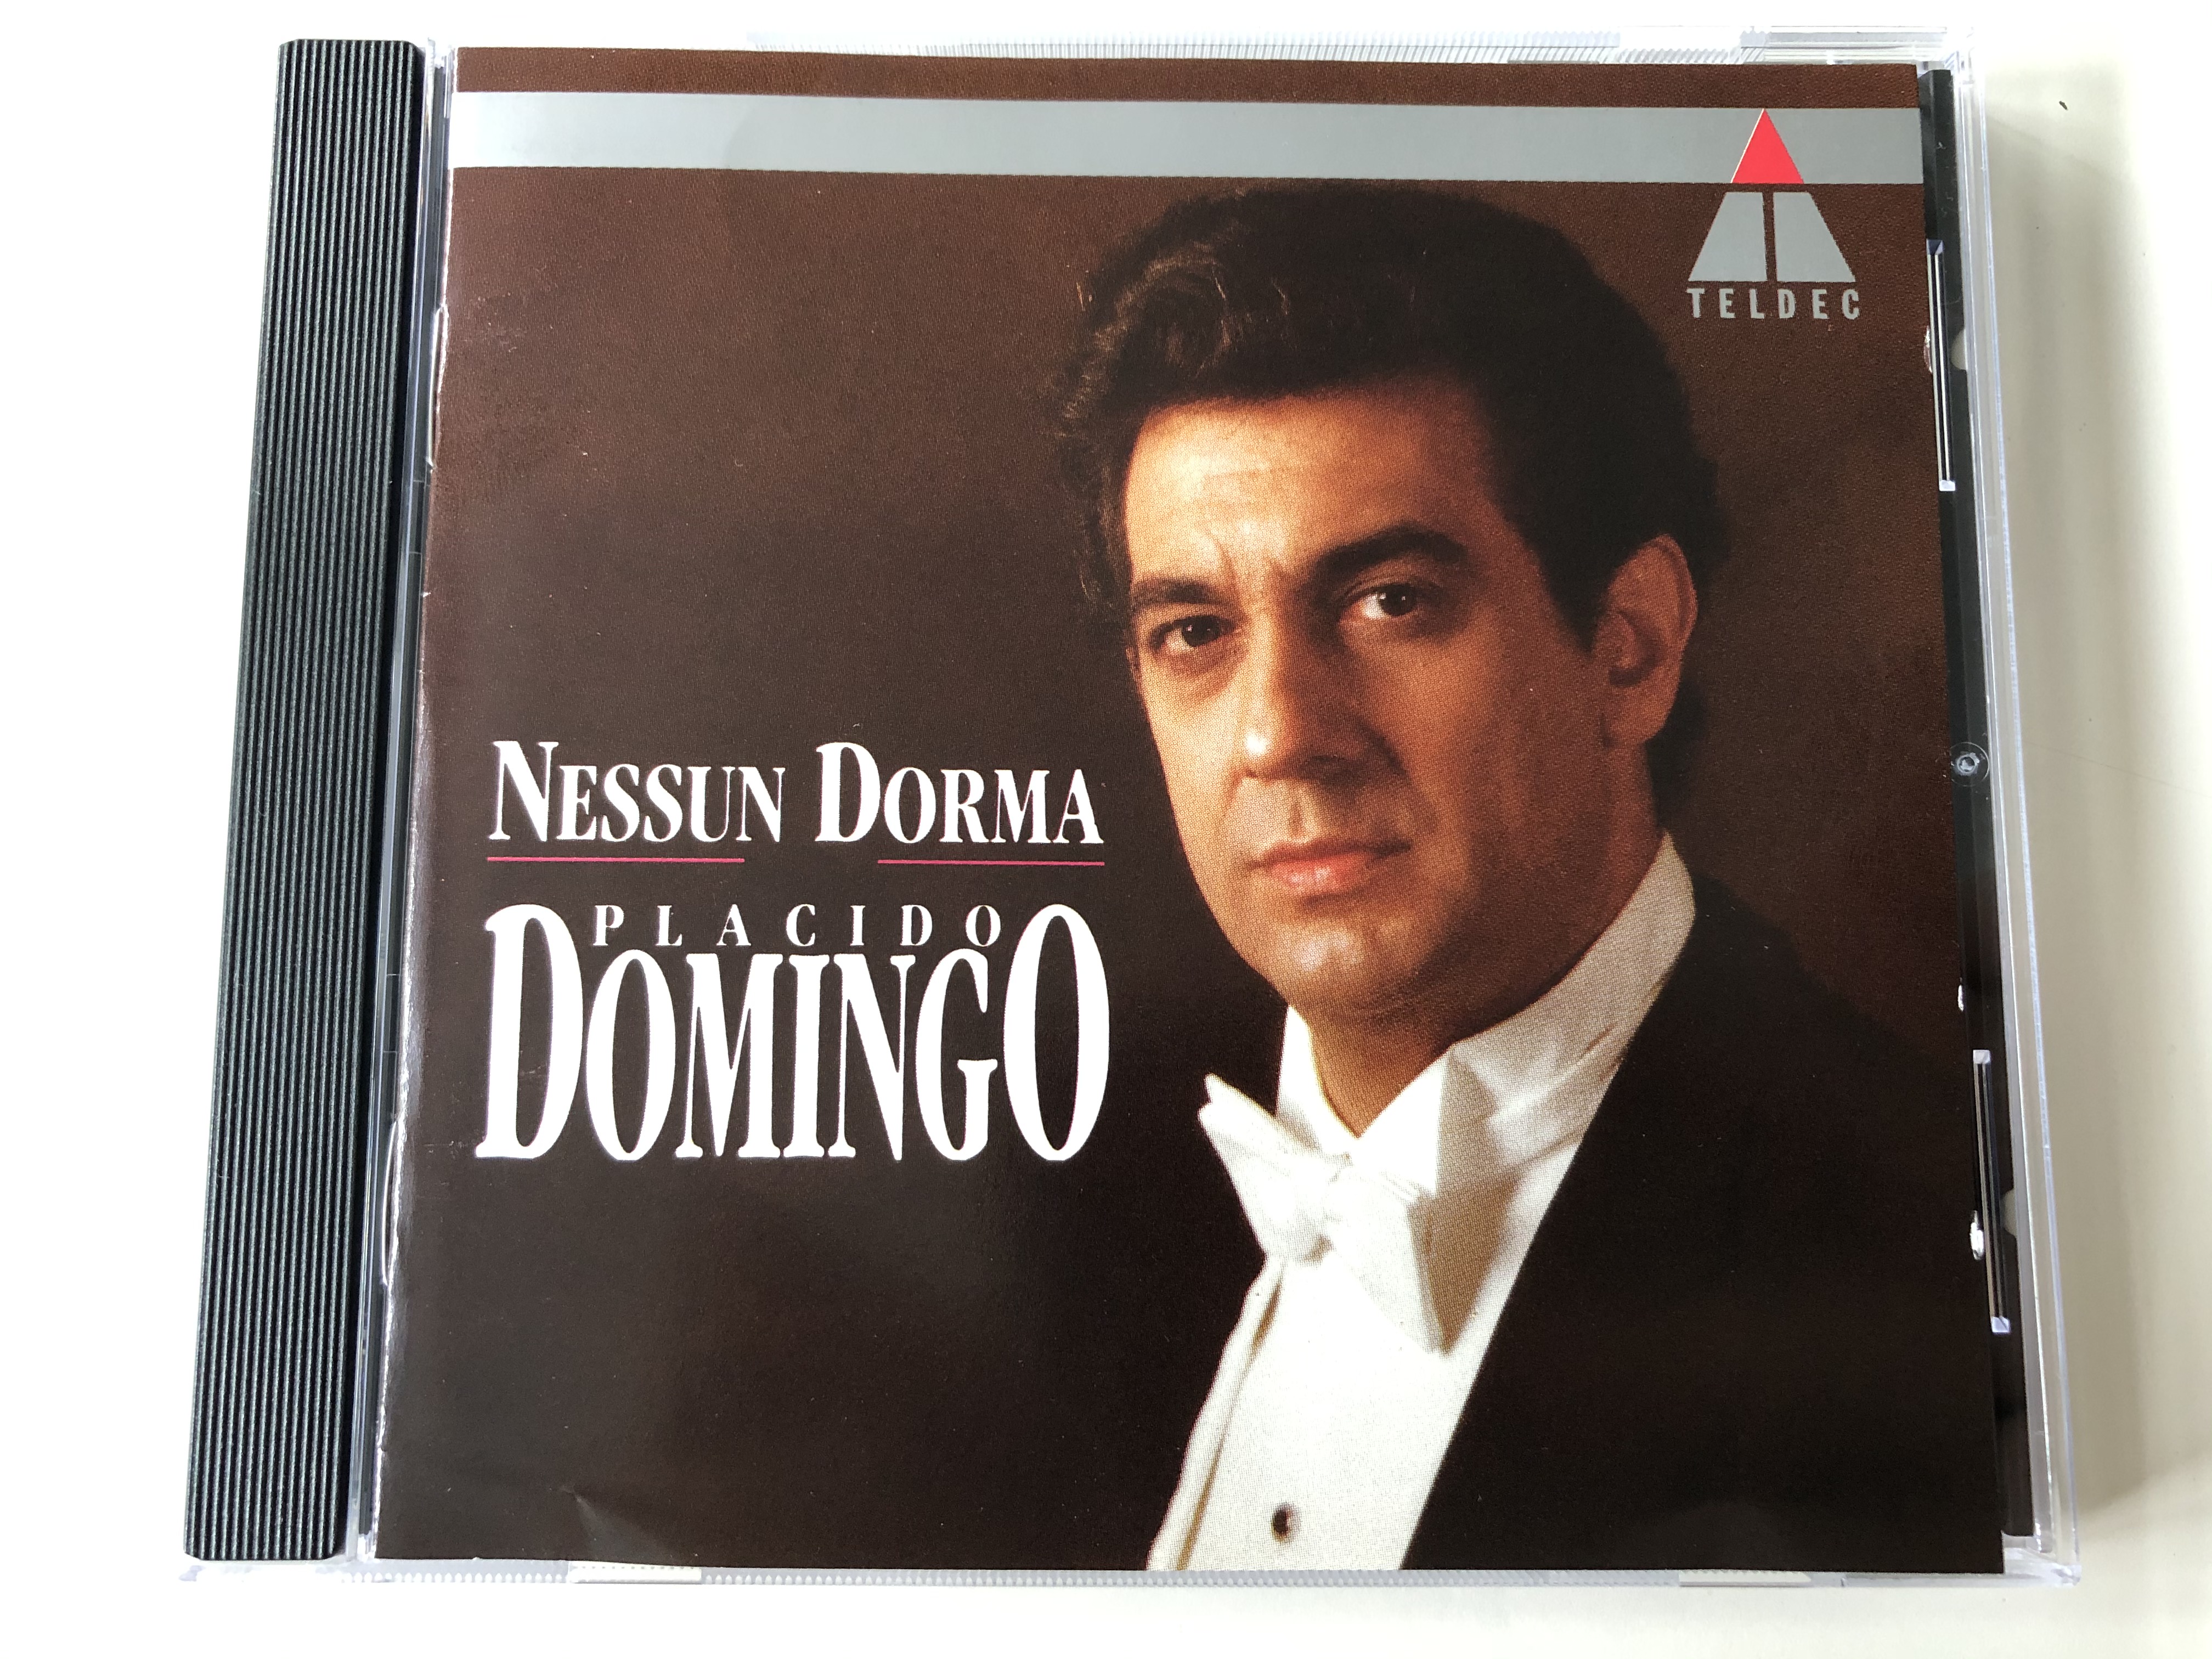 nessun-dorma-placido-domingo-teldec-classics-audio-cd-1991-stereo-9031-73741-2-1-.jpg